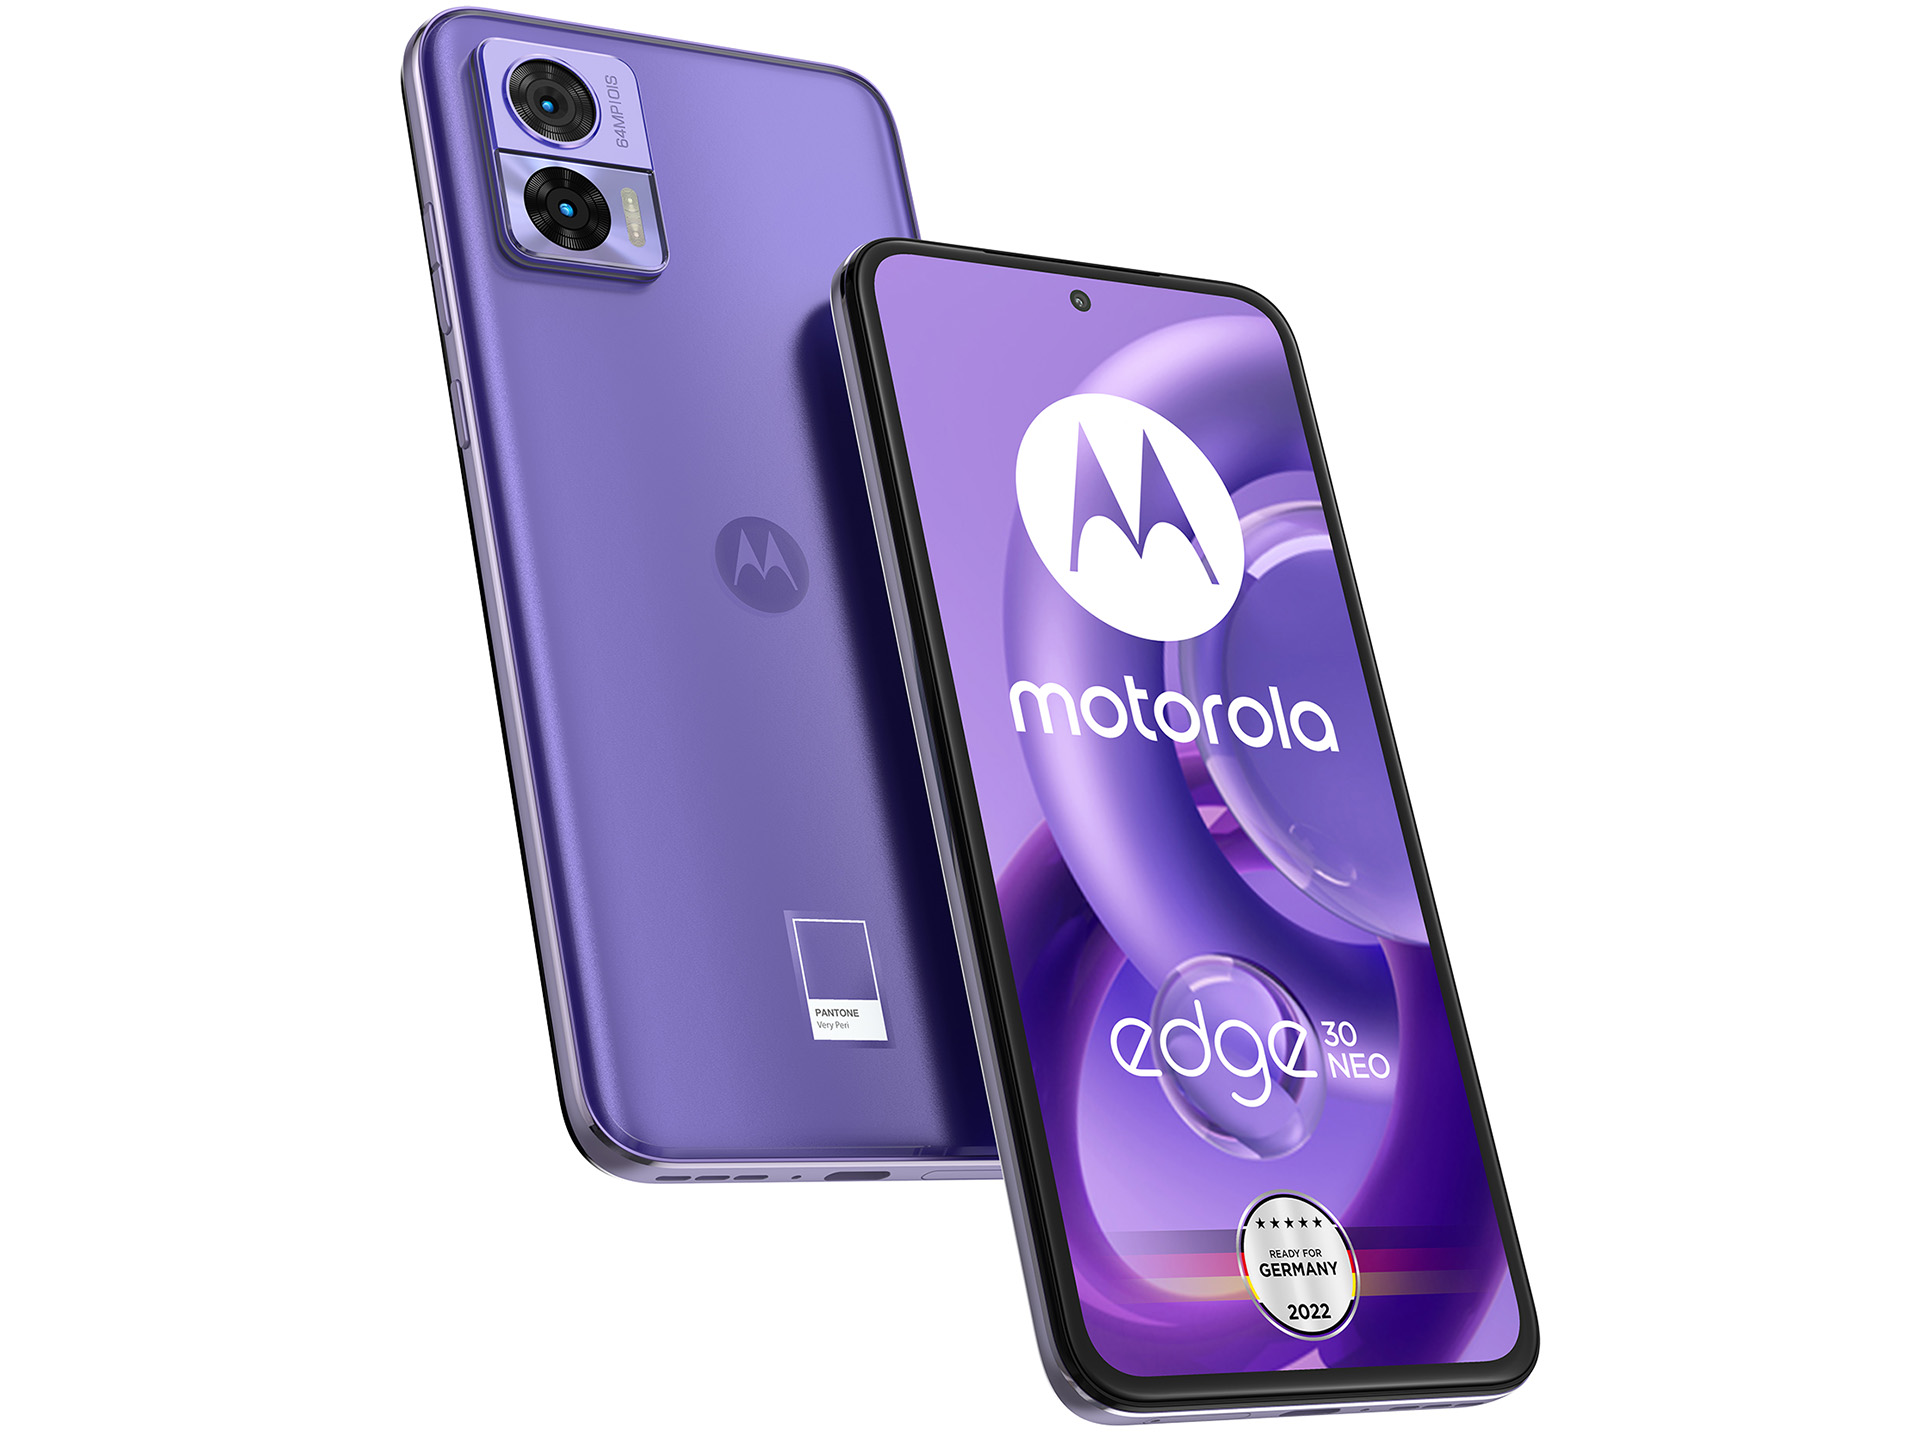 Celular Motorola Edge 30 Neo 5G de 6.28“ 